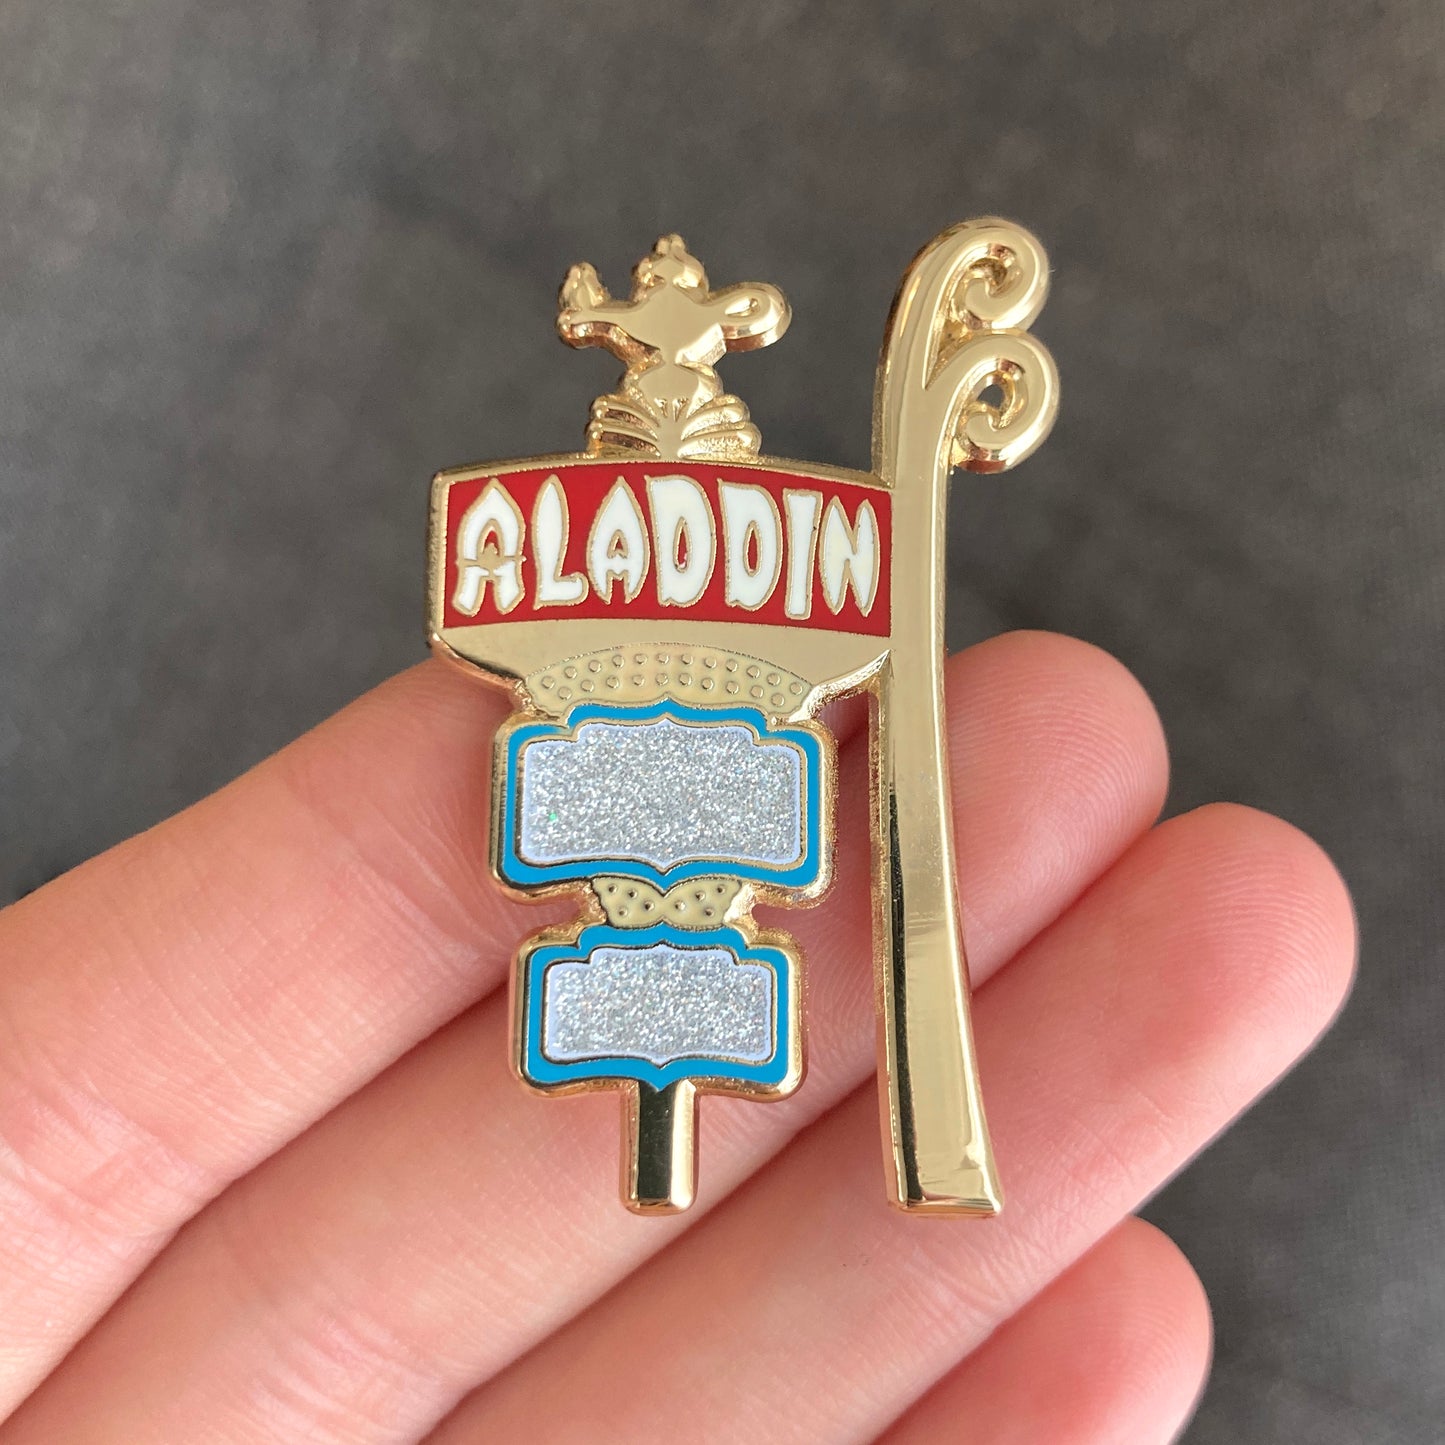 Aladdin Pin